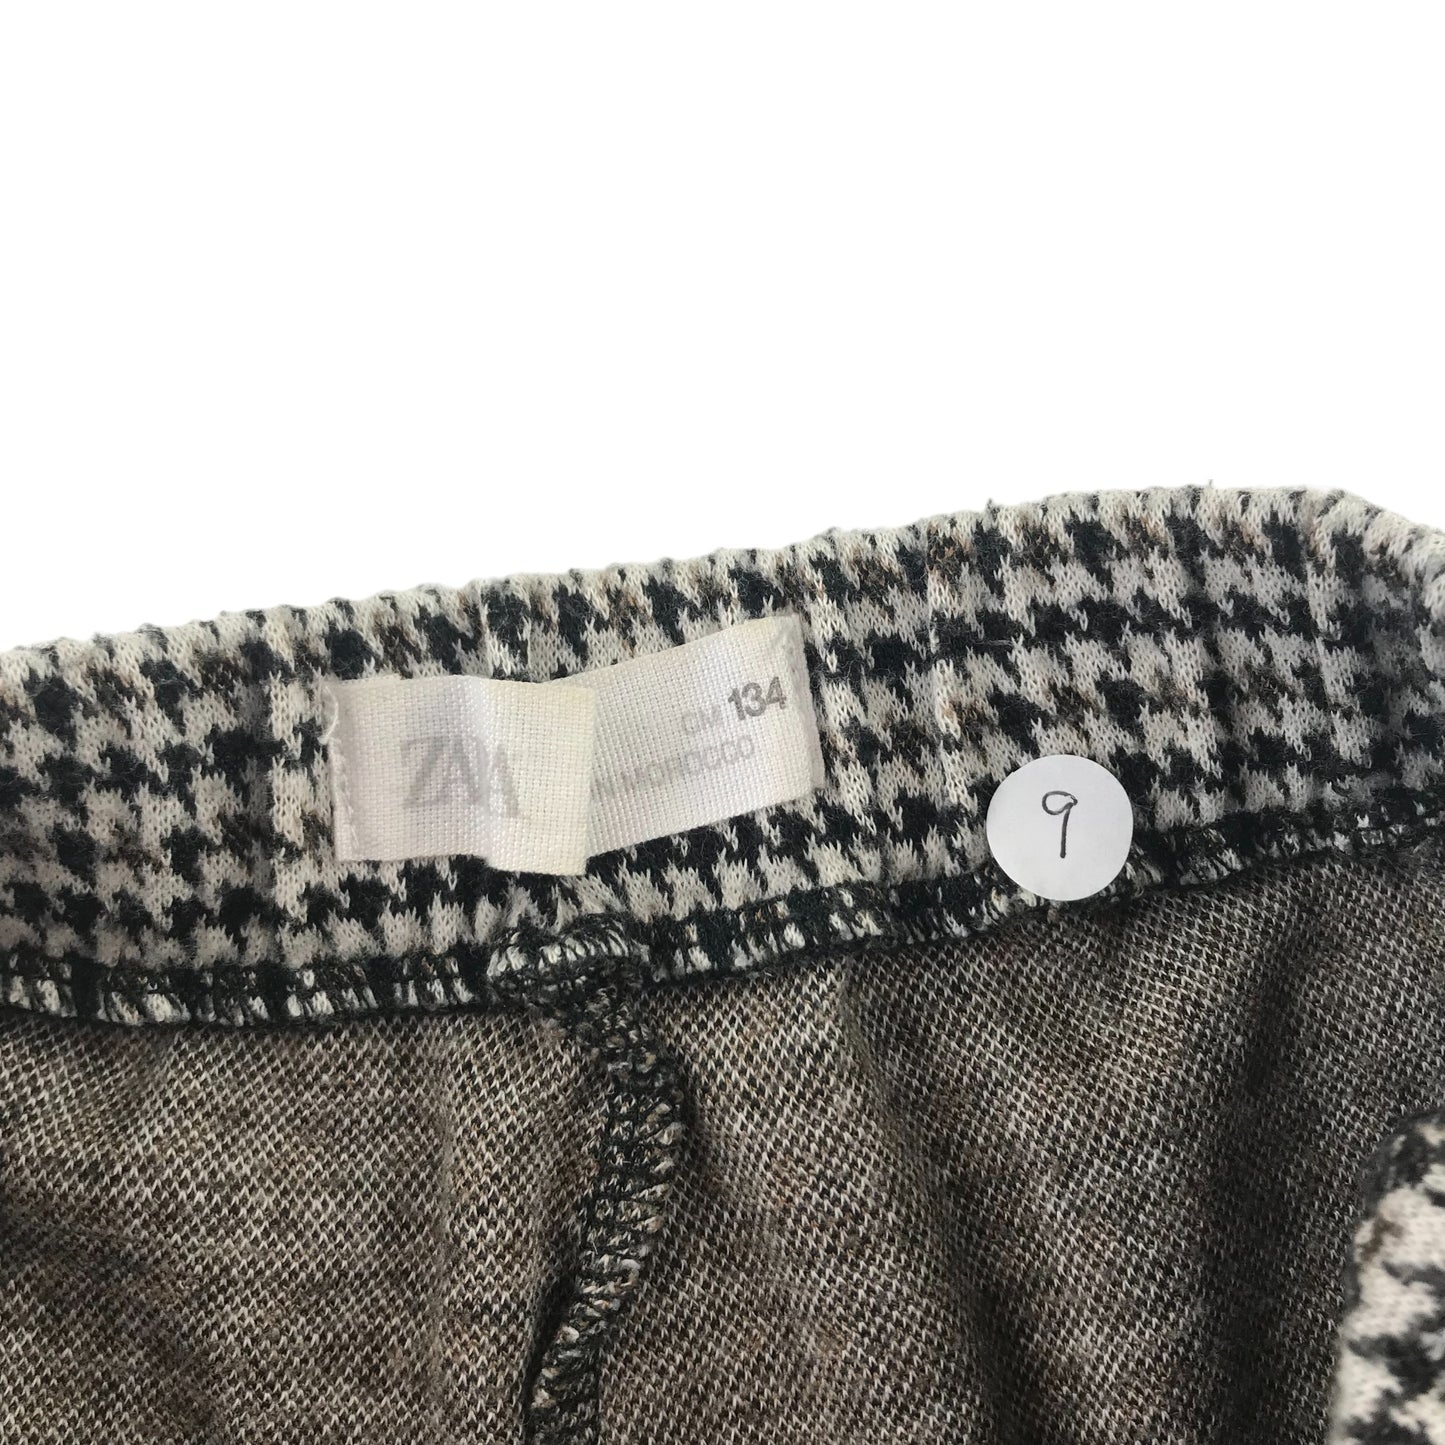 Zara skort 9 years black and white houndstooth knit pattern